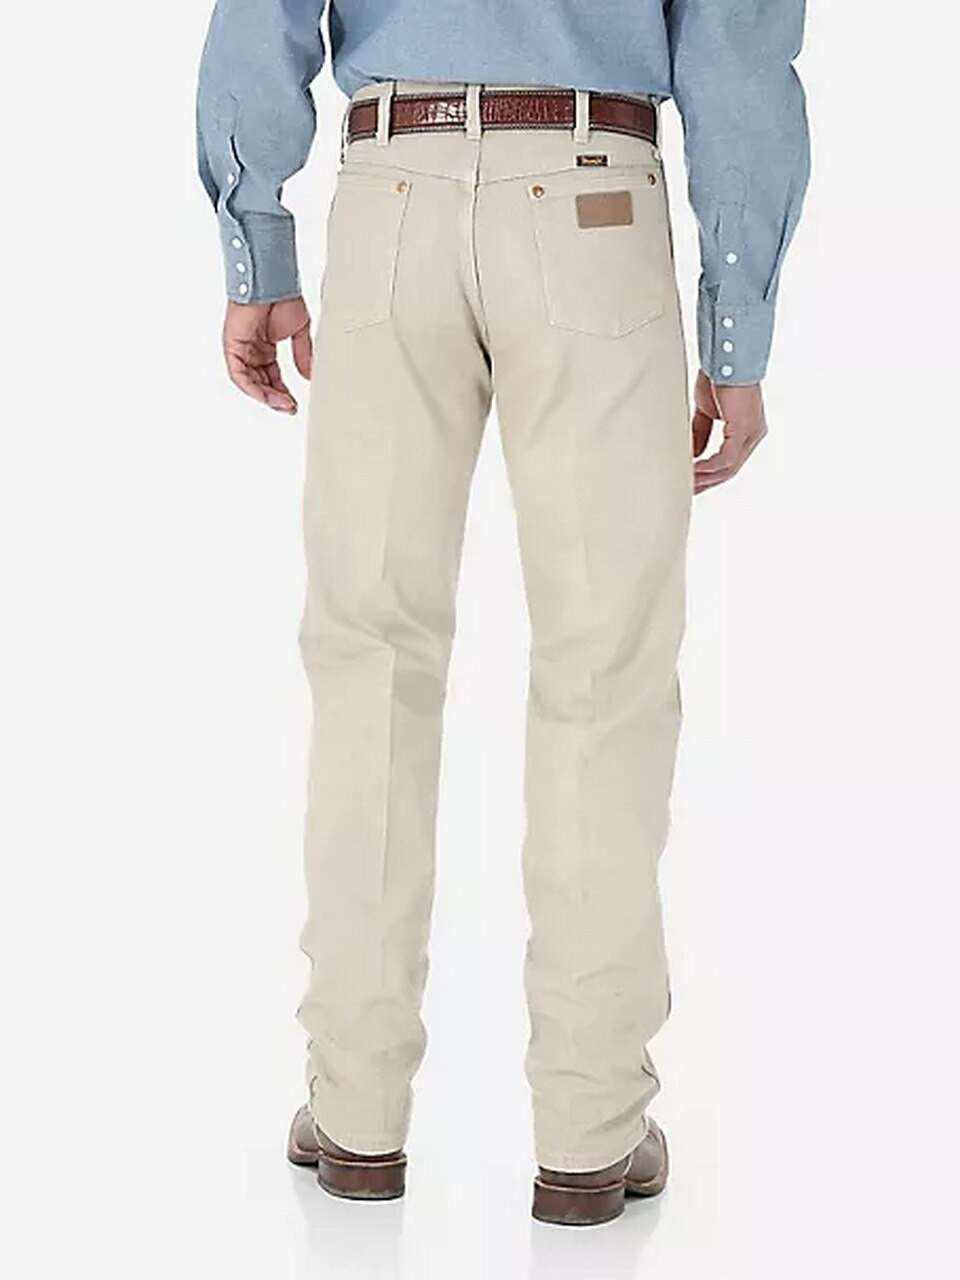 Wrangler Cowboy Men's Original Fit Tan Jeans